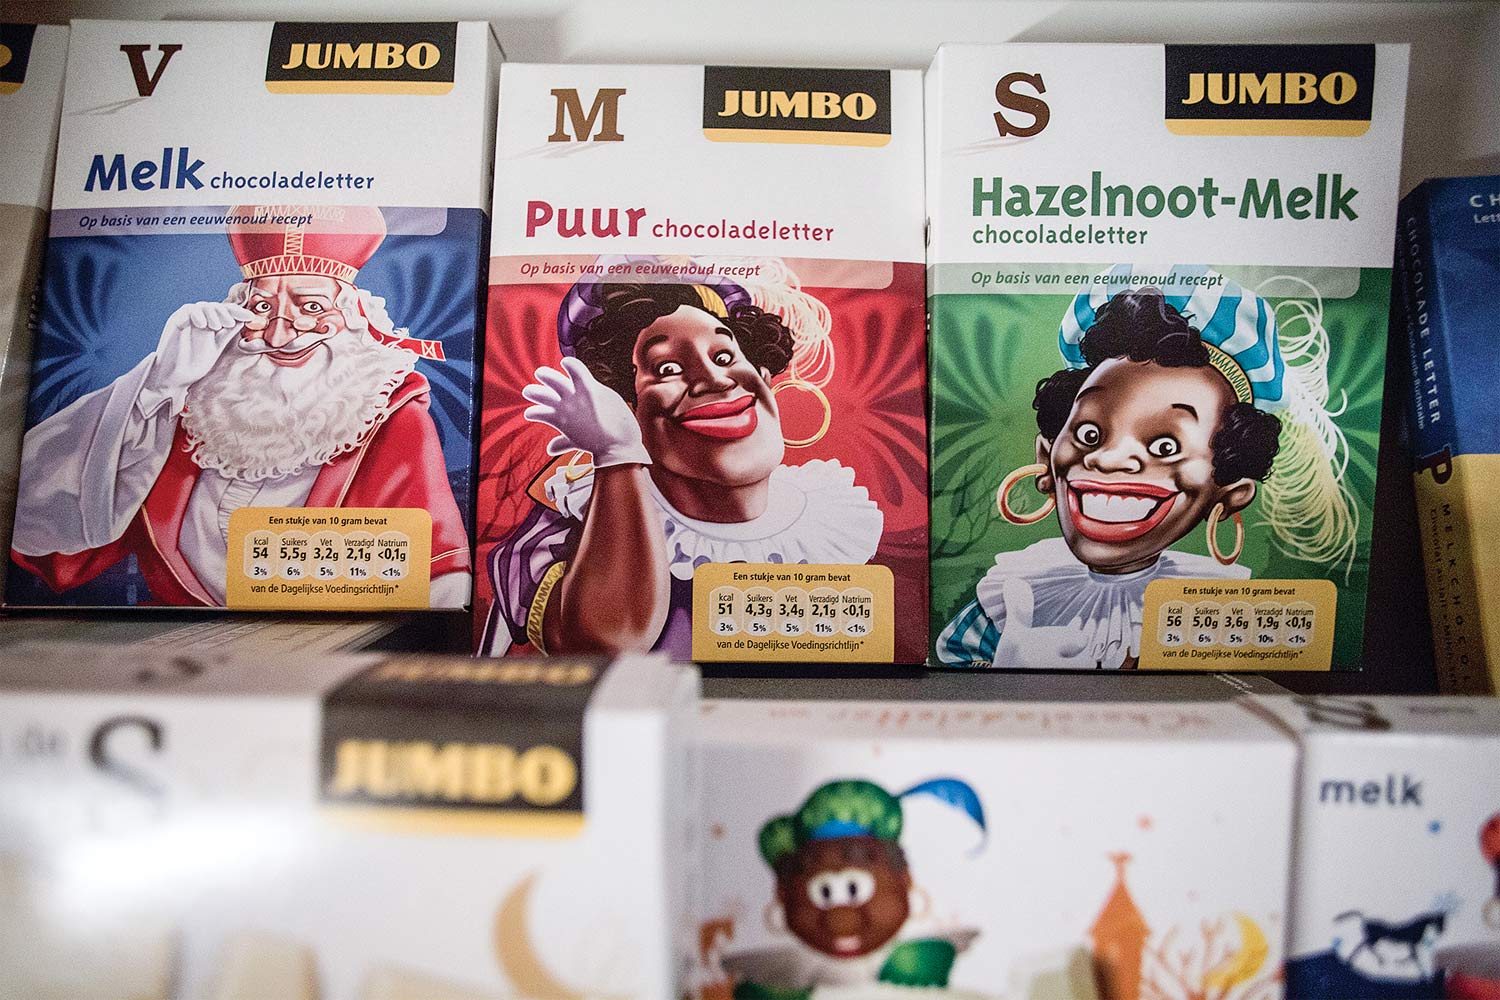 A store display in the Netherlands of Sinterklaas and Zwarte Piet celebratory candy bars, October 2013. (Arie Kievitt / Hollandse Hoogte / Redux)